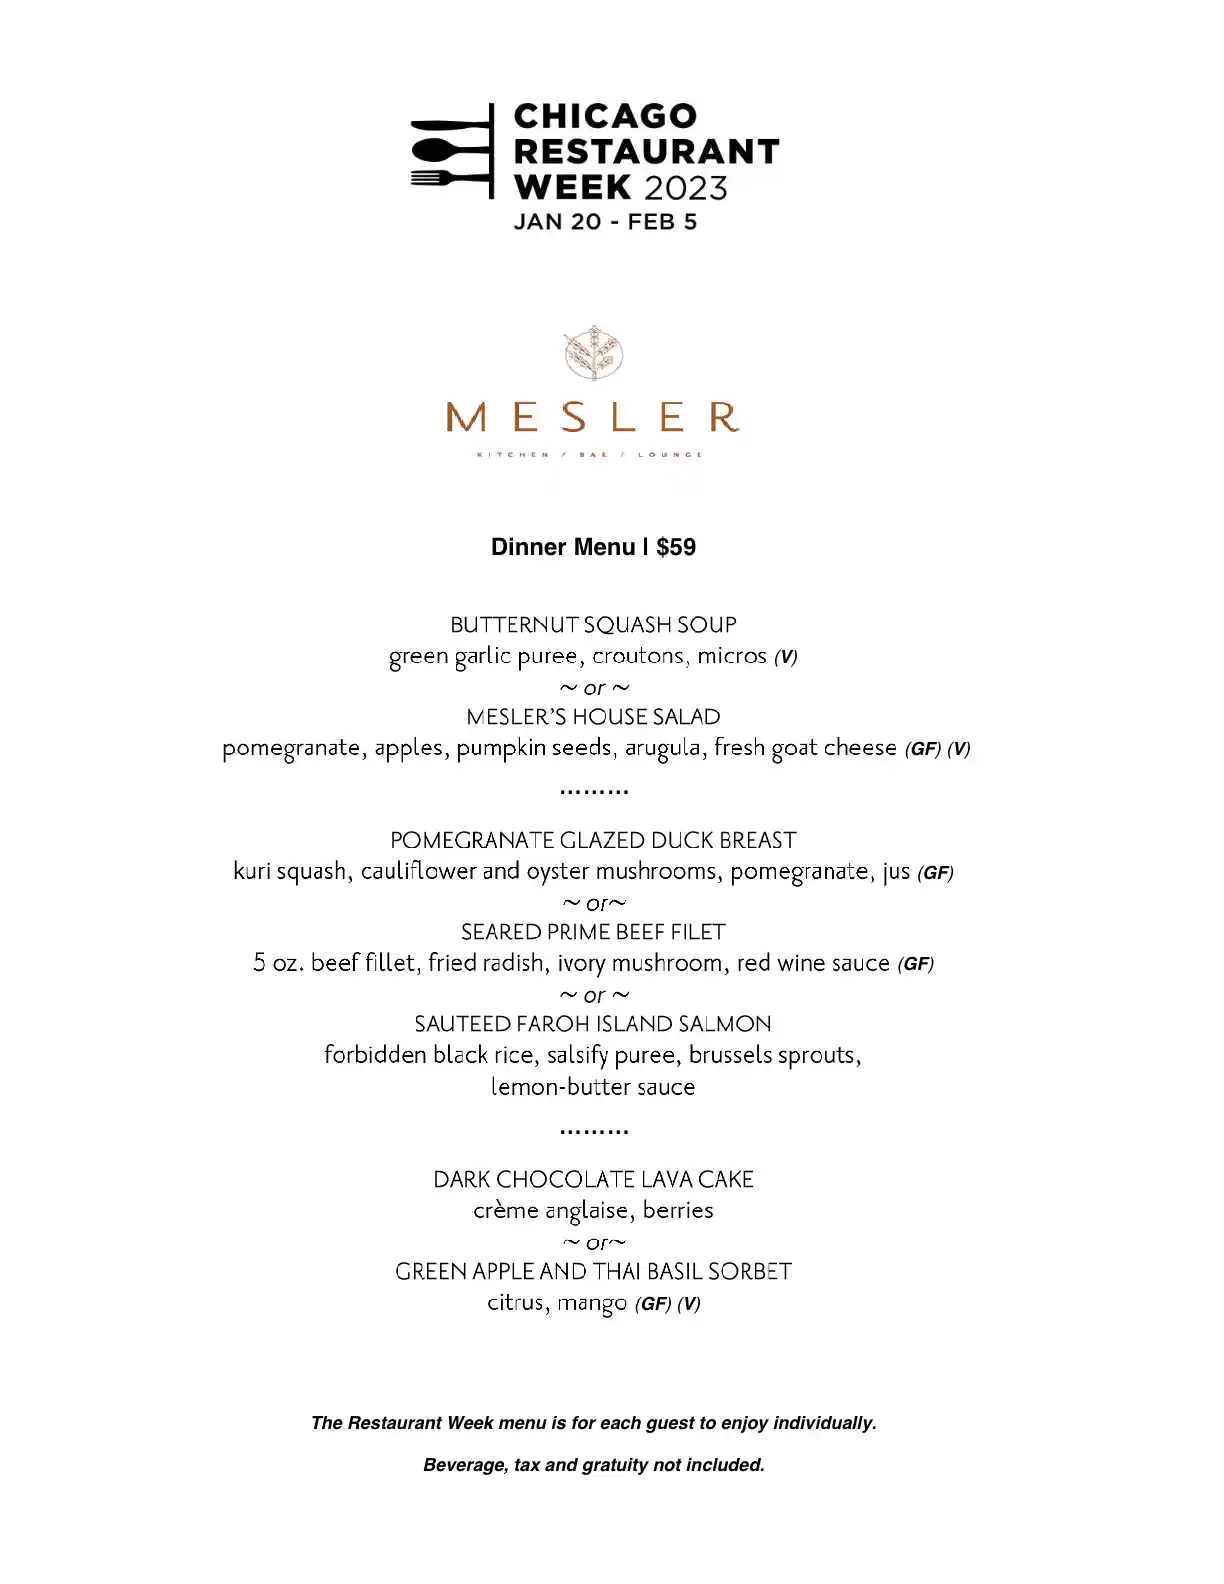 Chicago Restaurant Week 2023 Menu Mesler